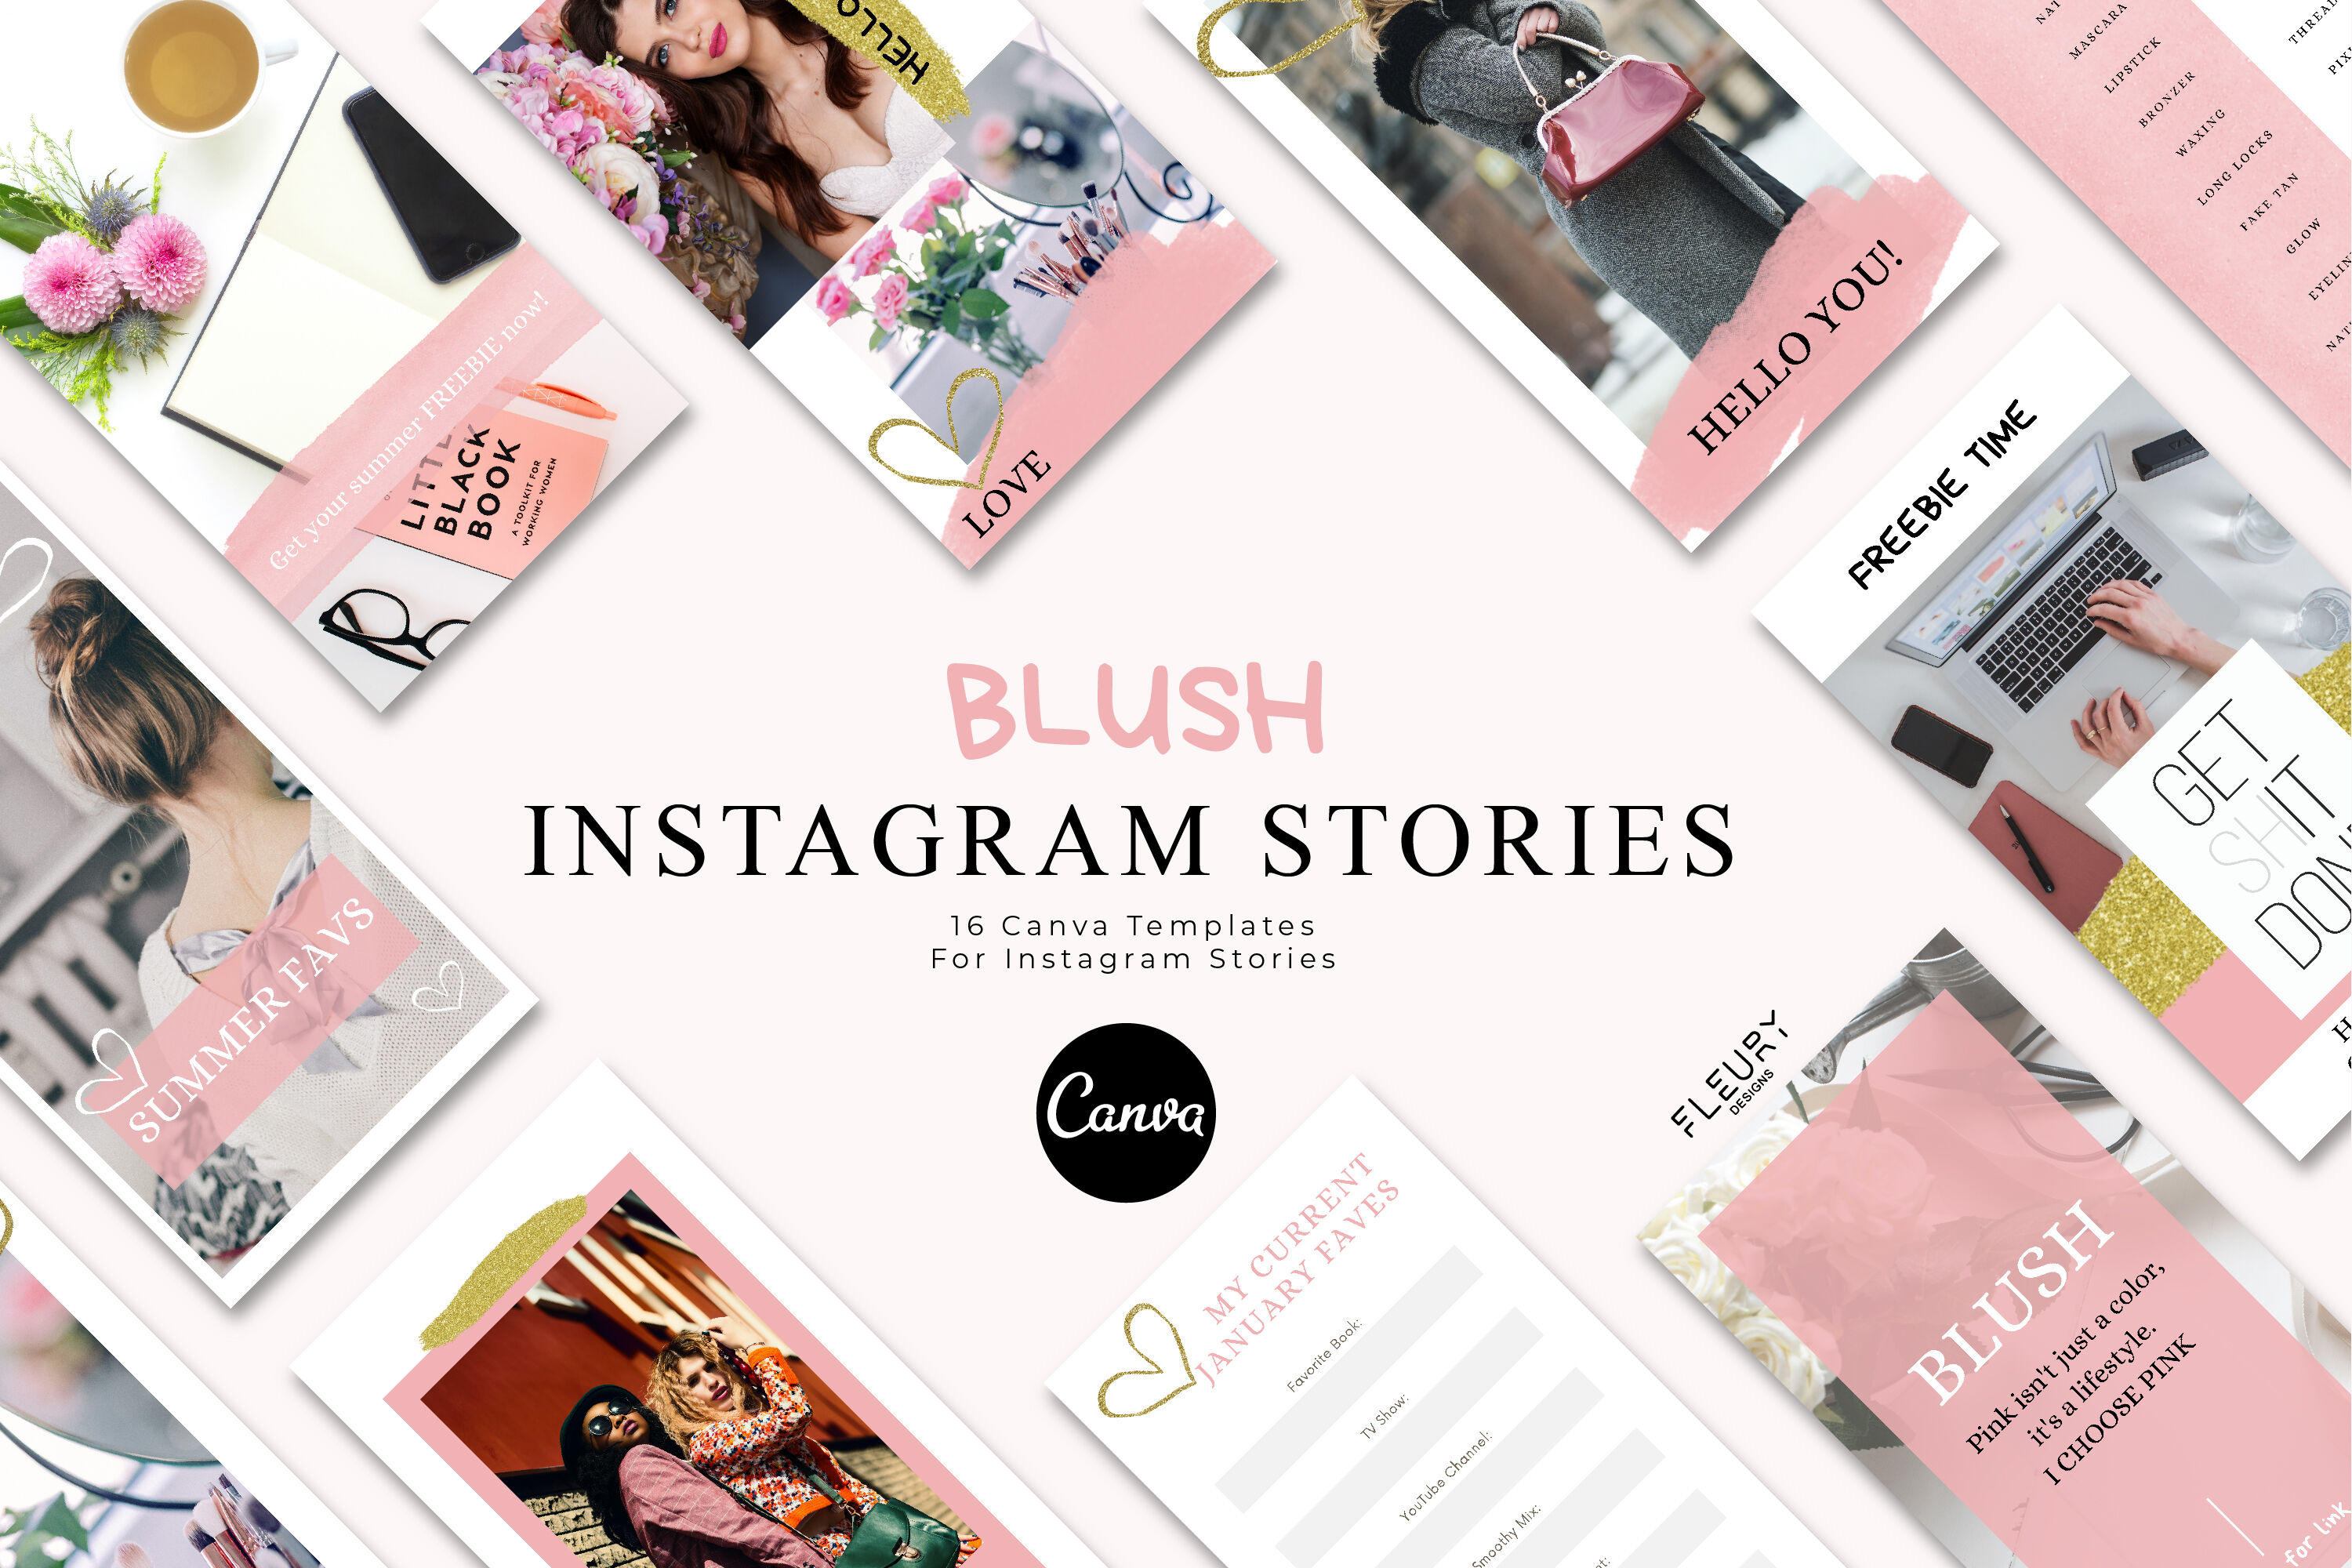 BLUSH - Instagram Story Templates for Canva By Christine Fleury |  TheHungryJPEG